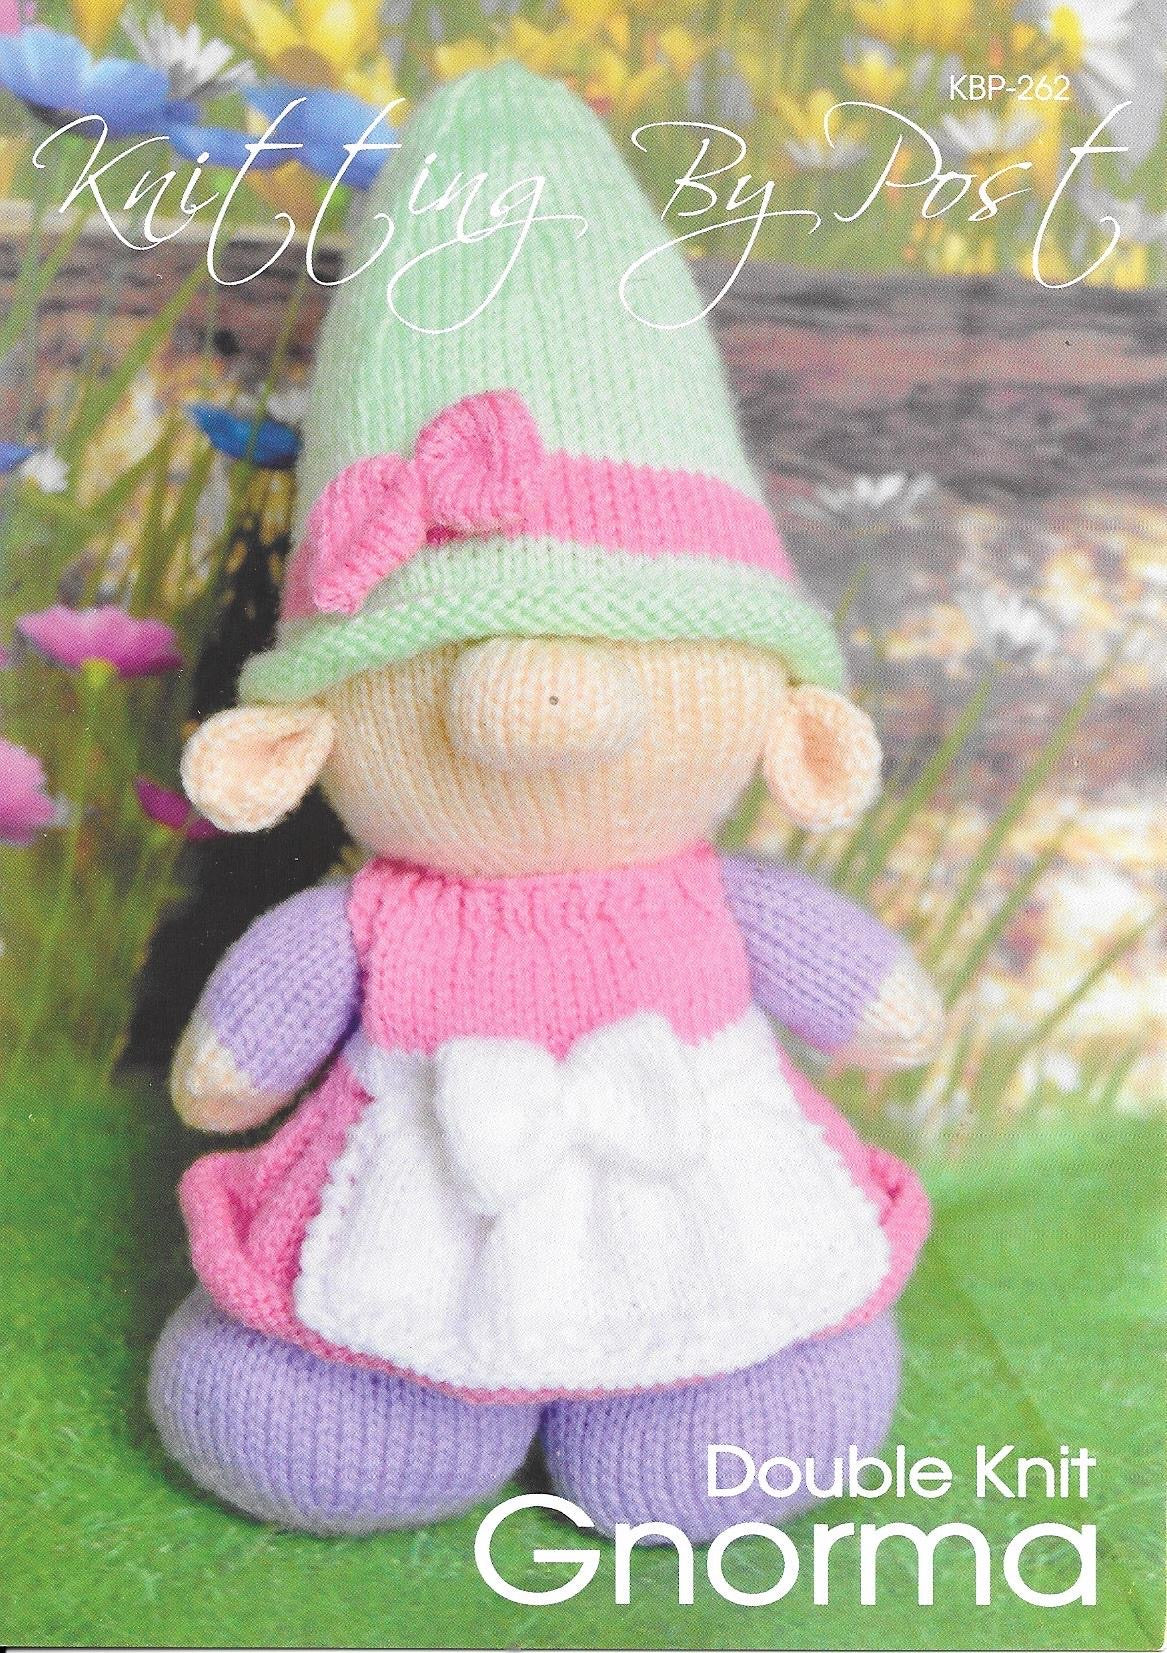 KBP262 Gnorma toy in DK knitting pattern